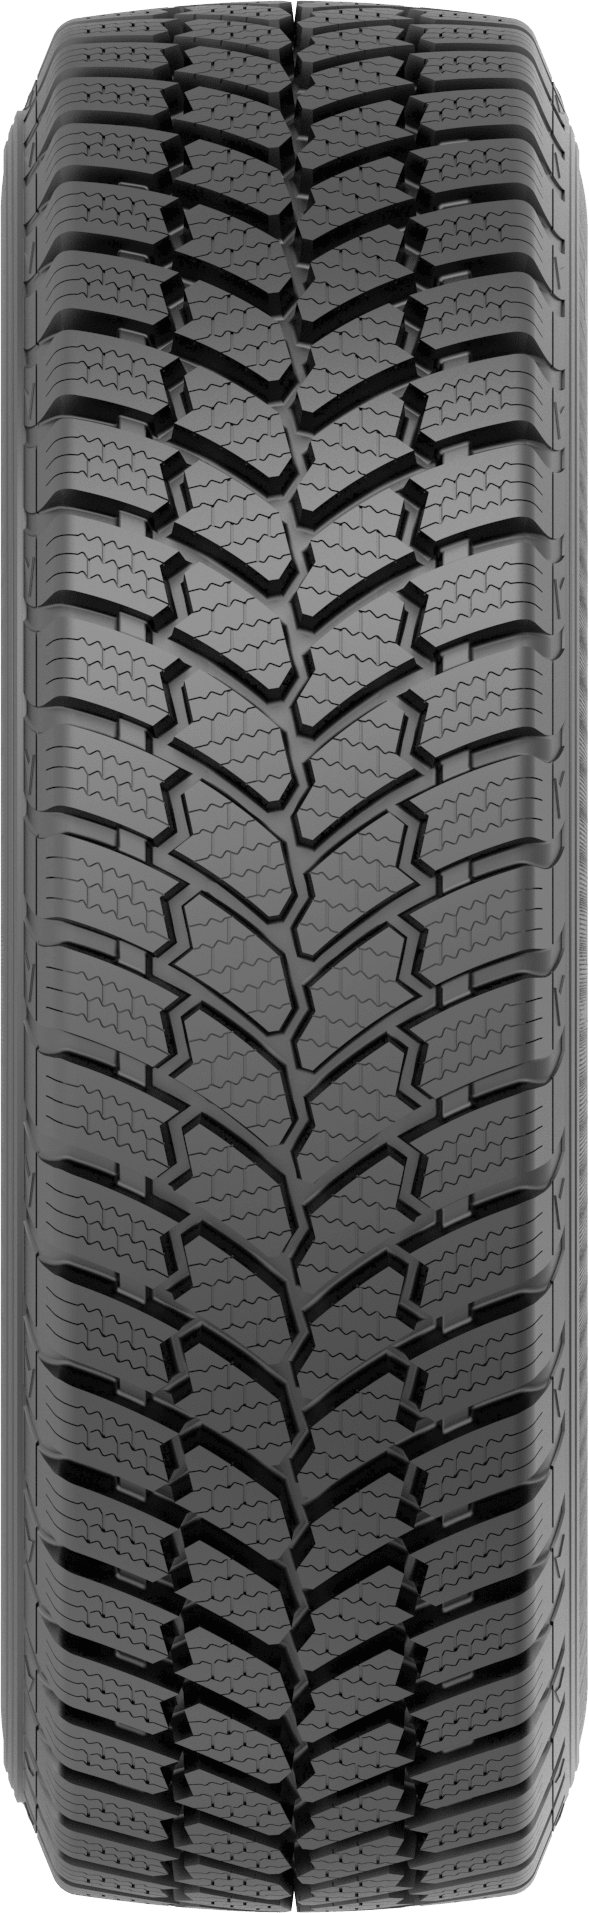 Buy Bridgestone Blizzak SimpleTire | Tires Online DM-V2